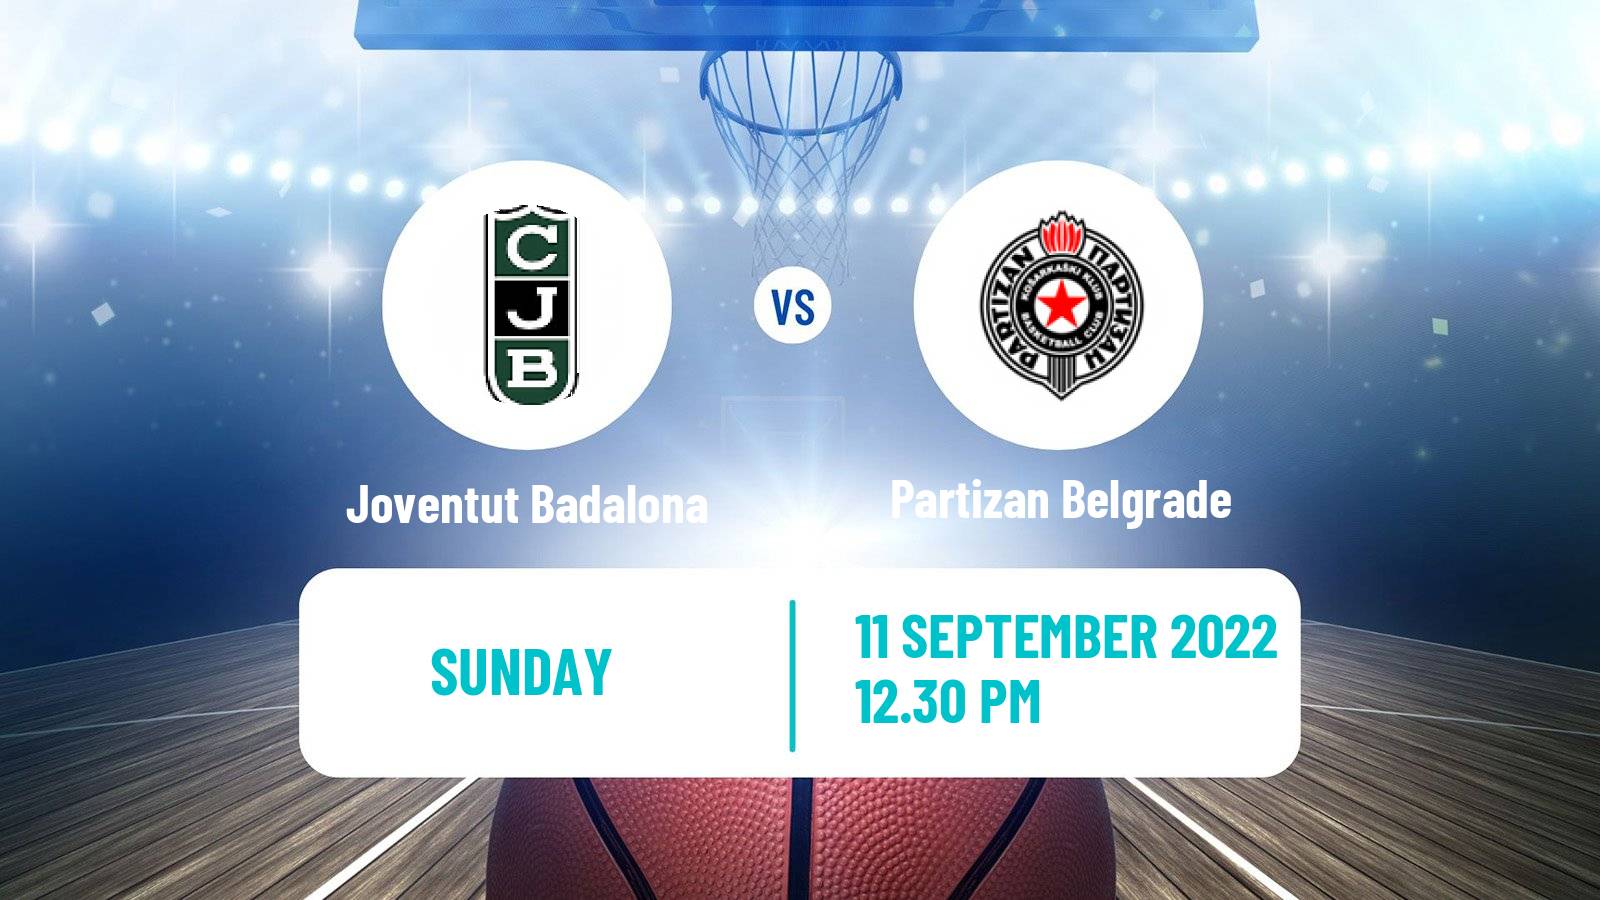 Basketball Club Friendly Basketball Joventut Badalona - Partizan Belgrade